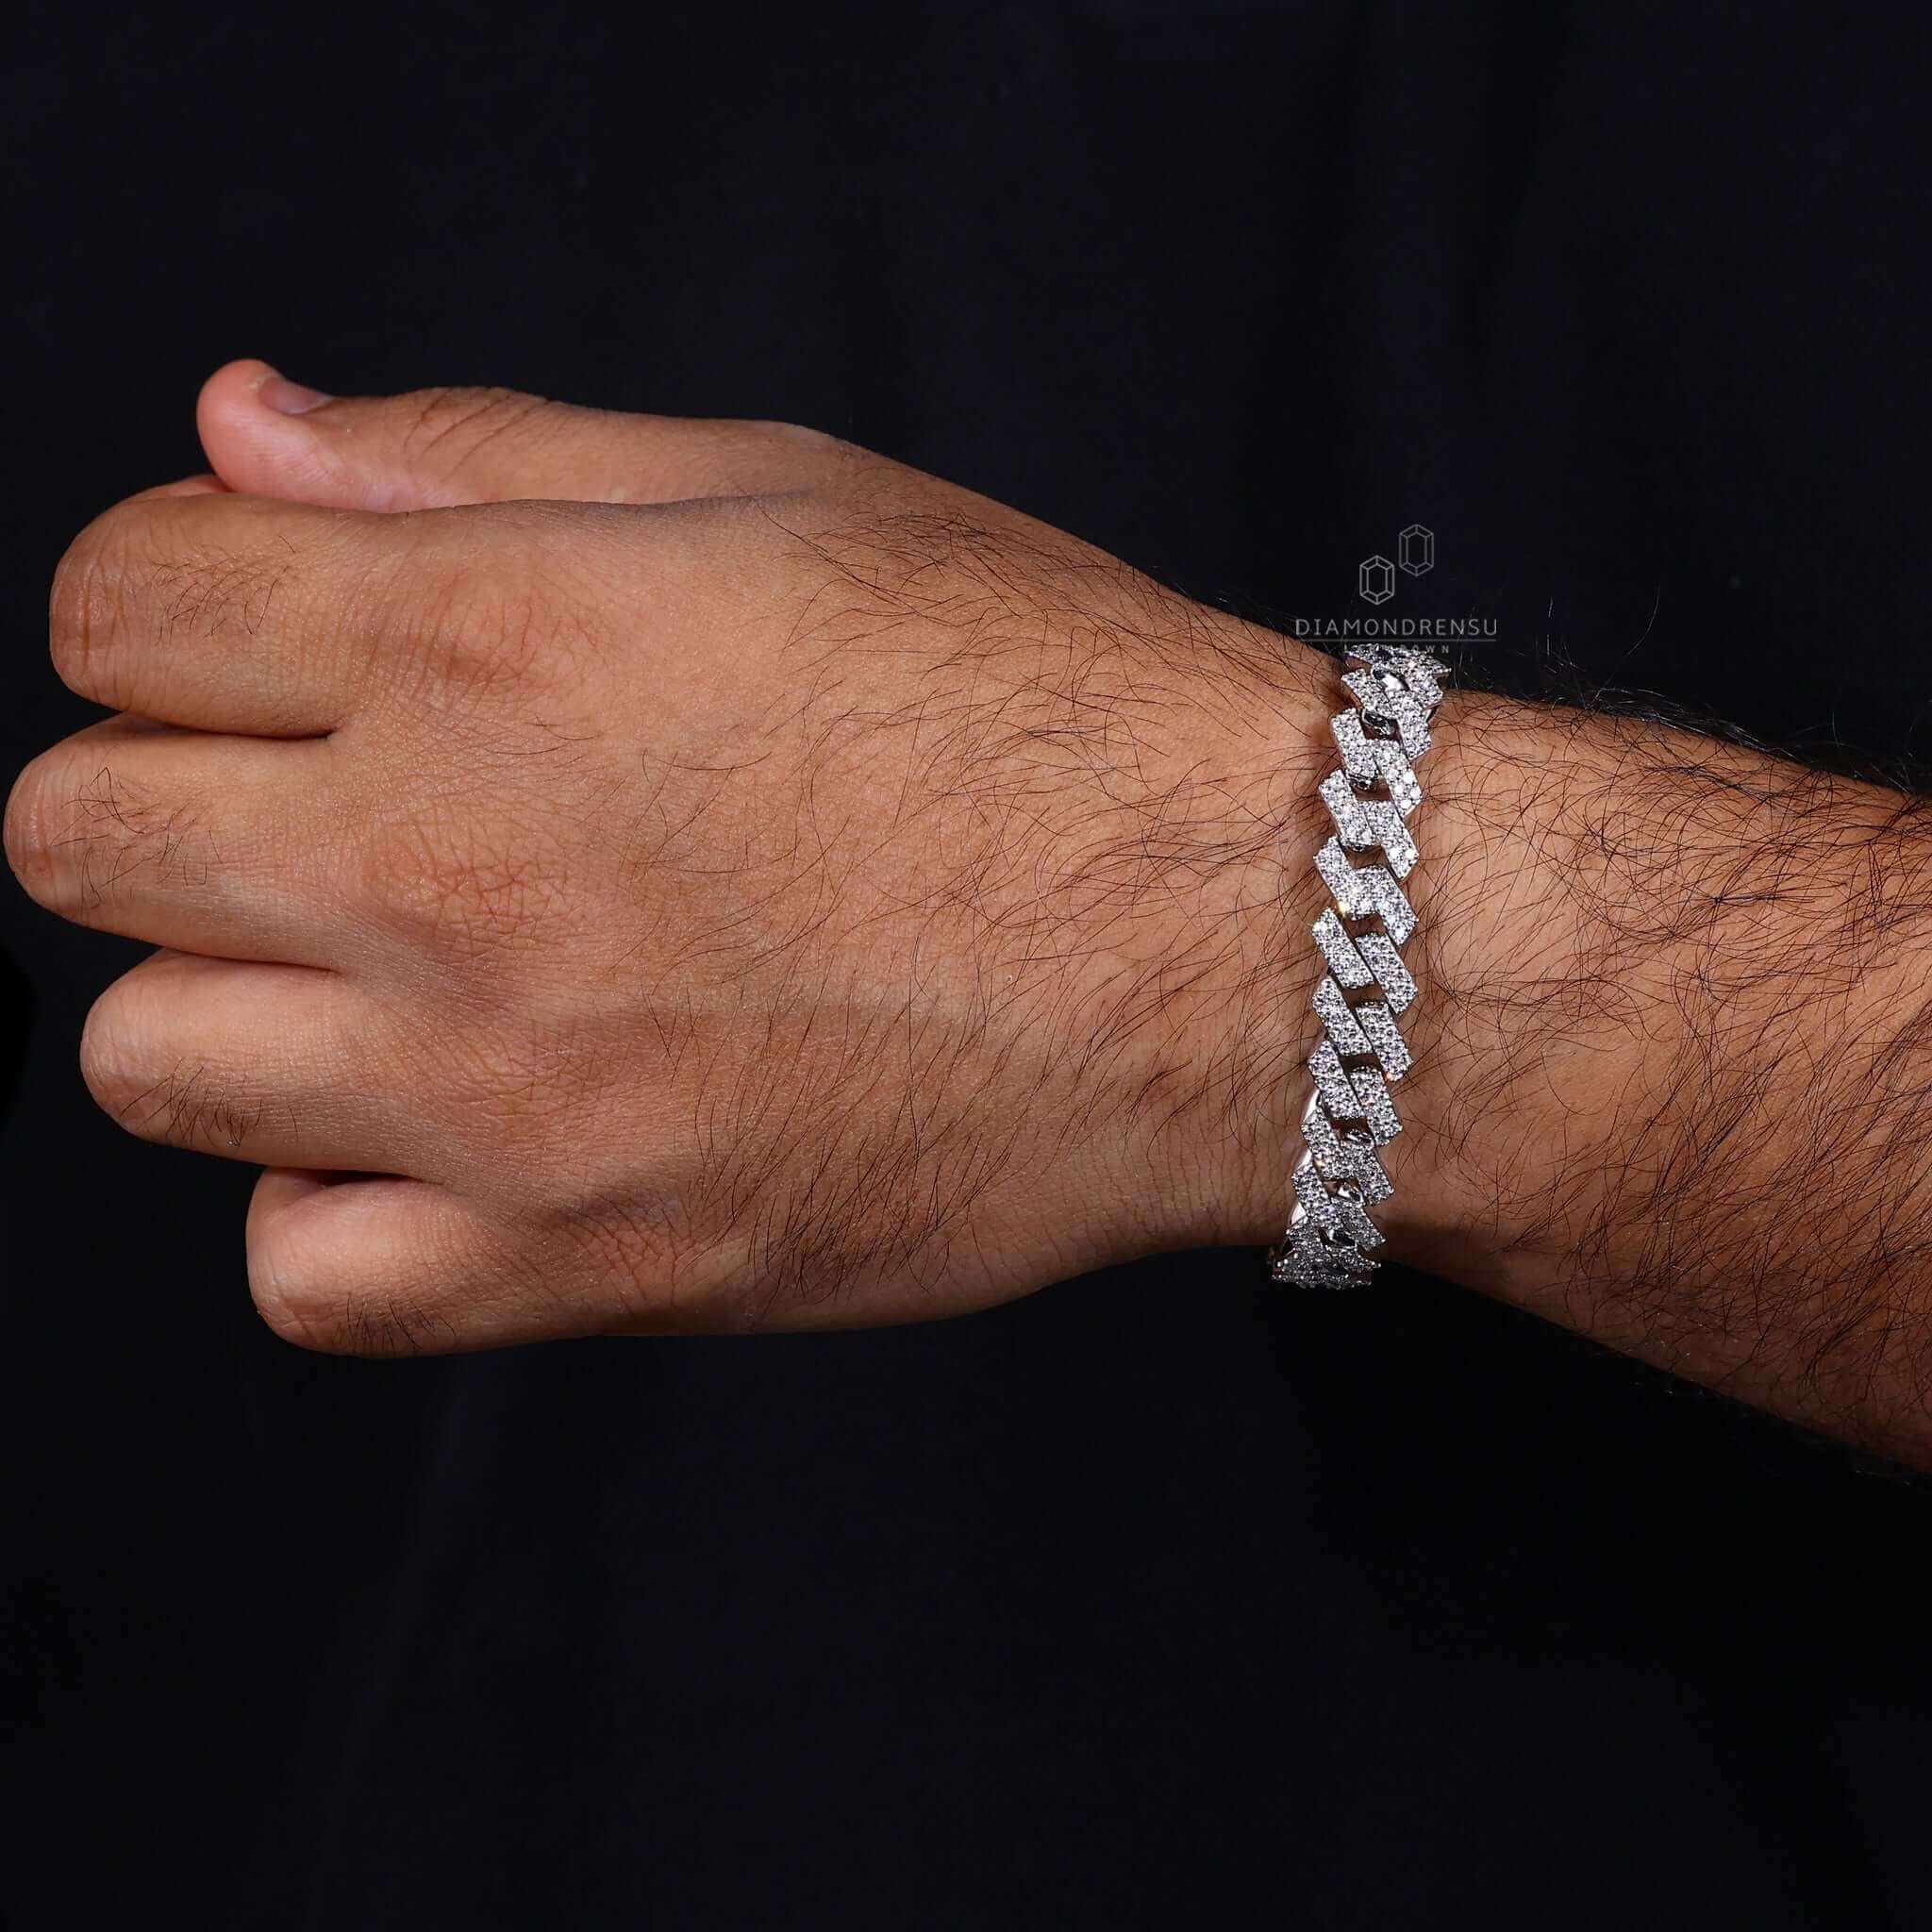 Lab Grown Diamond Cuban Link Bracelet